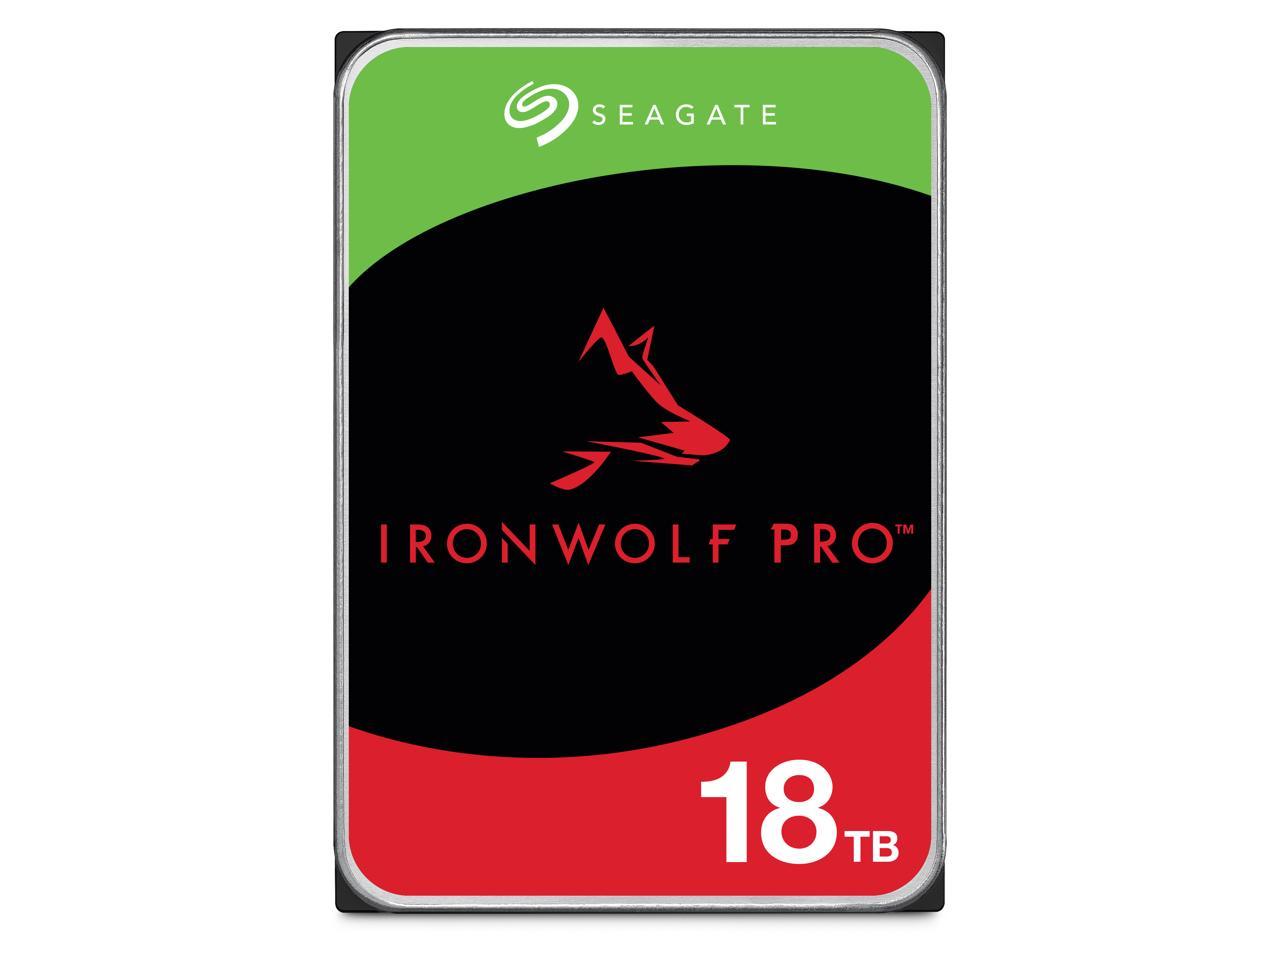 Seagate IronWolf Pro 18TB NAS Hard Drive $300